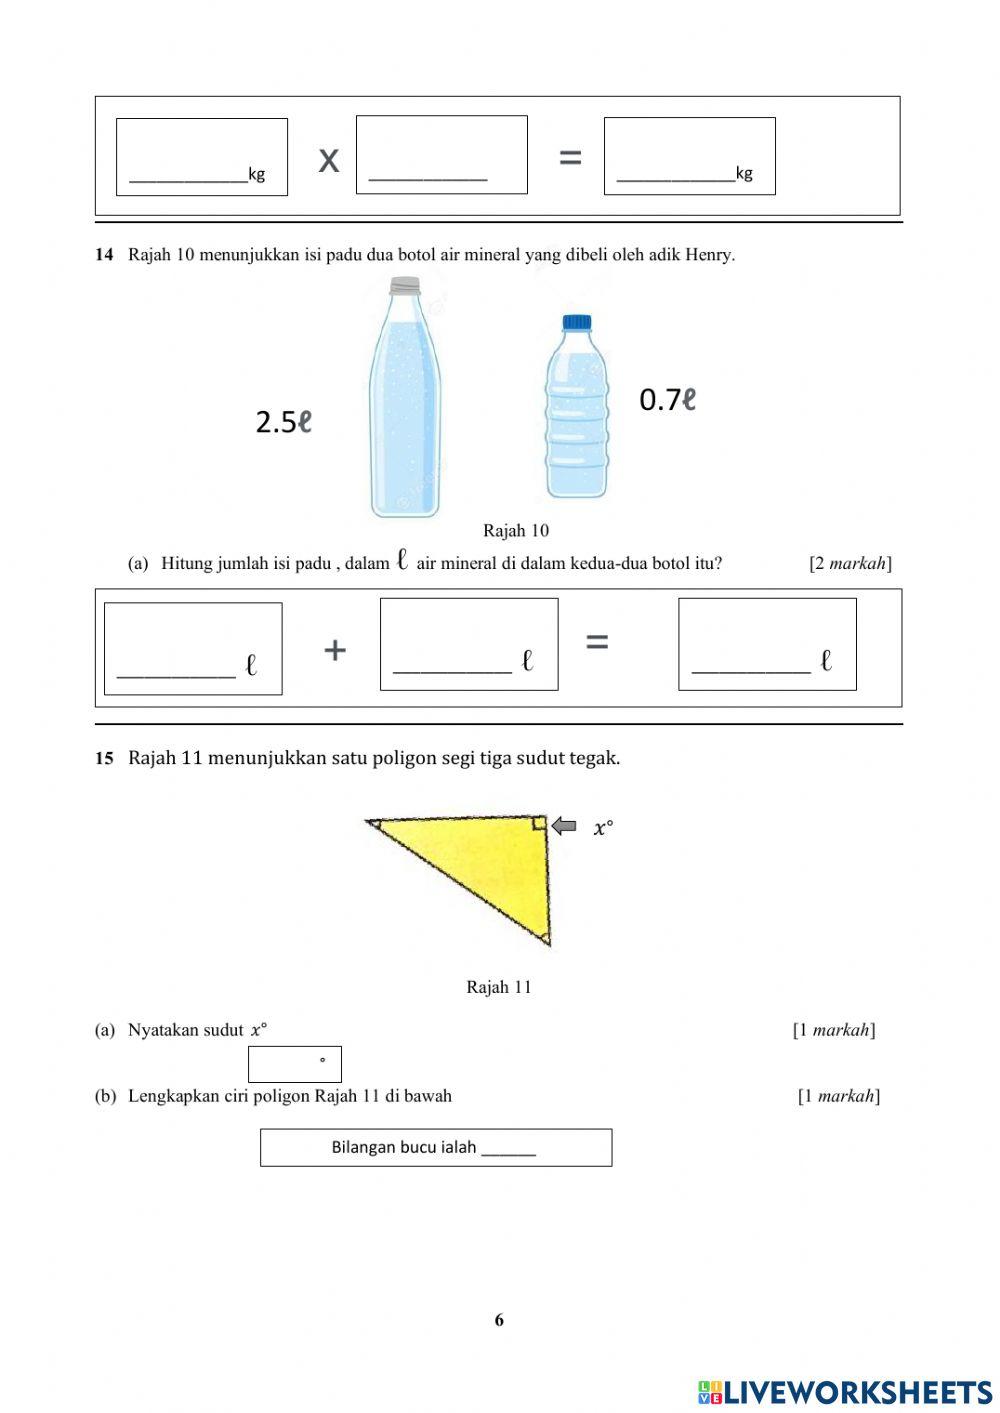 Pentaksiran setara standard matematik tahun 6 kertas 2